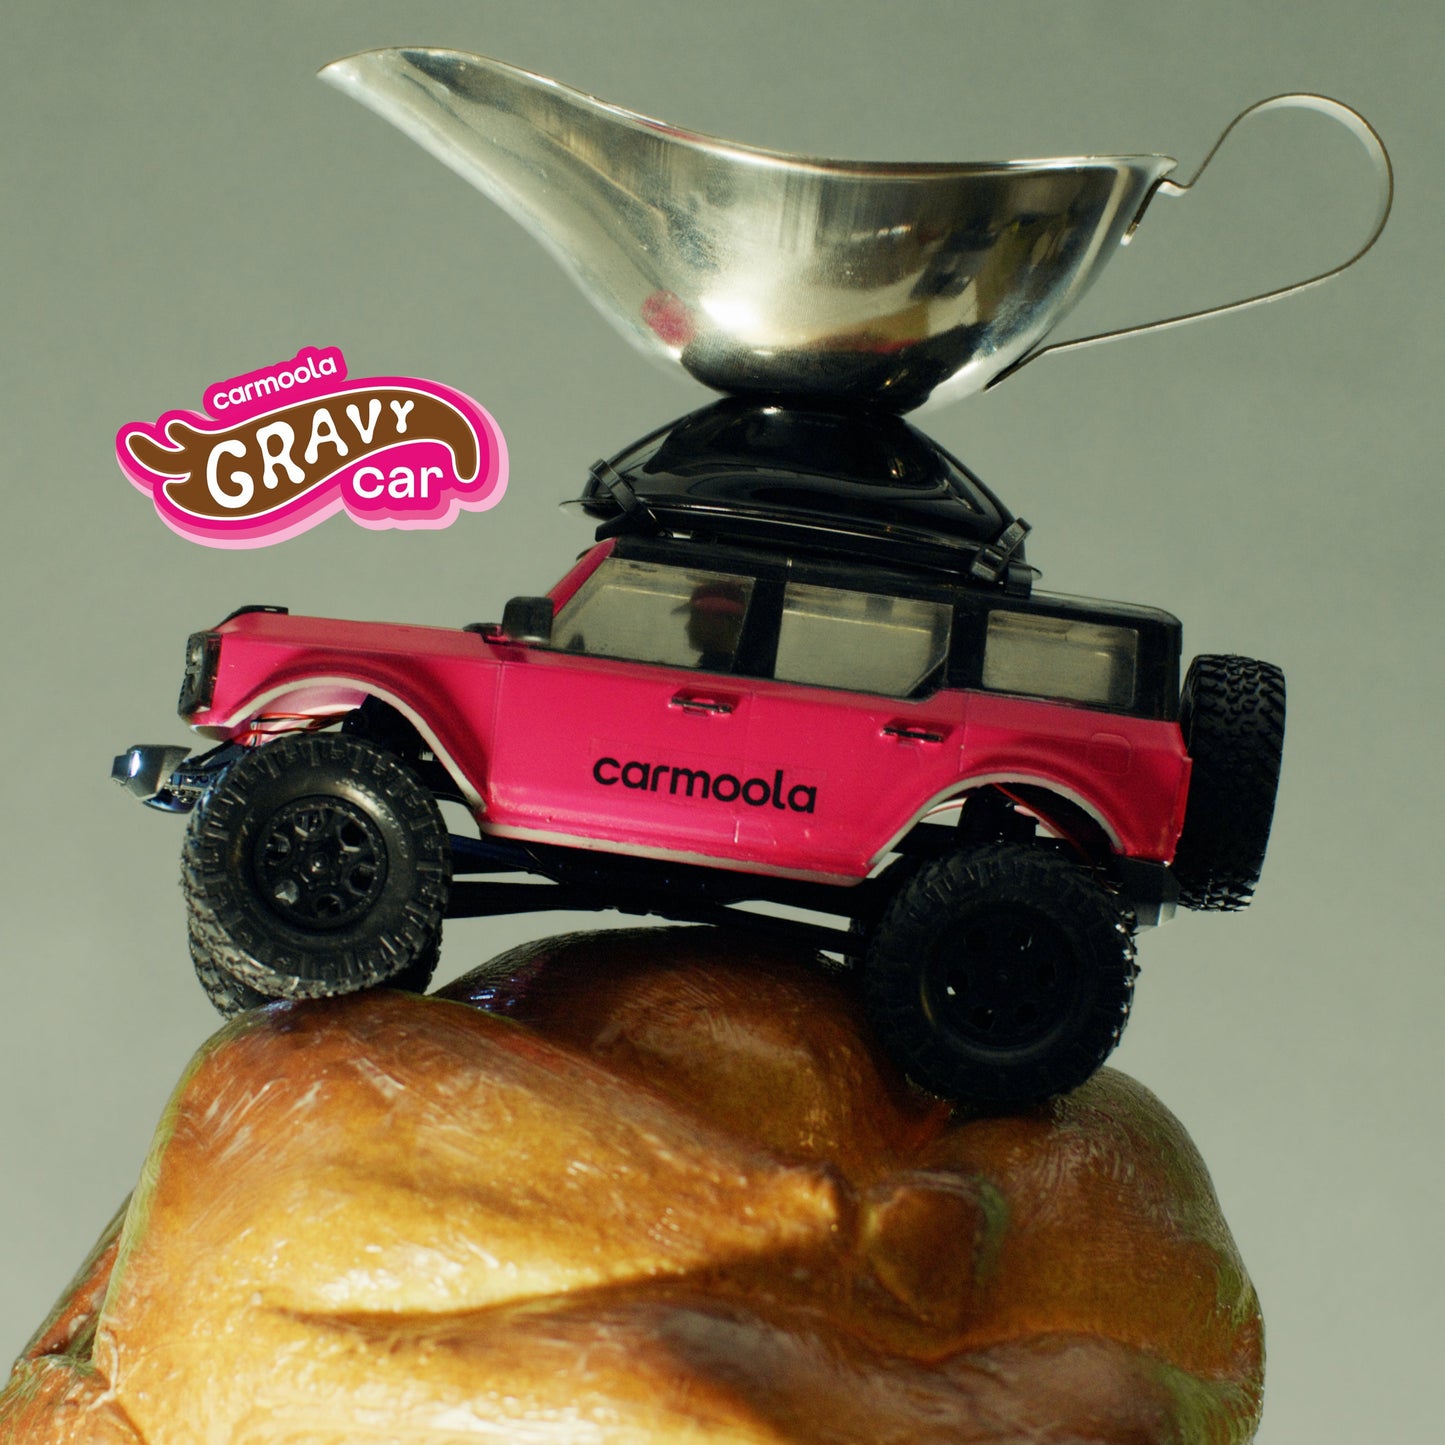 Gravy Car